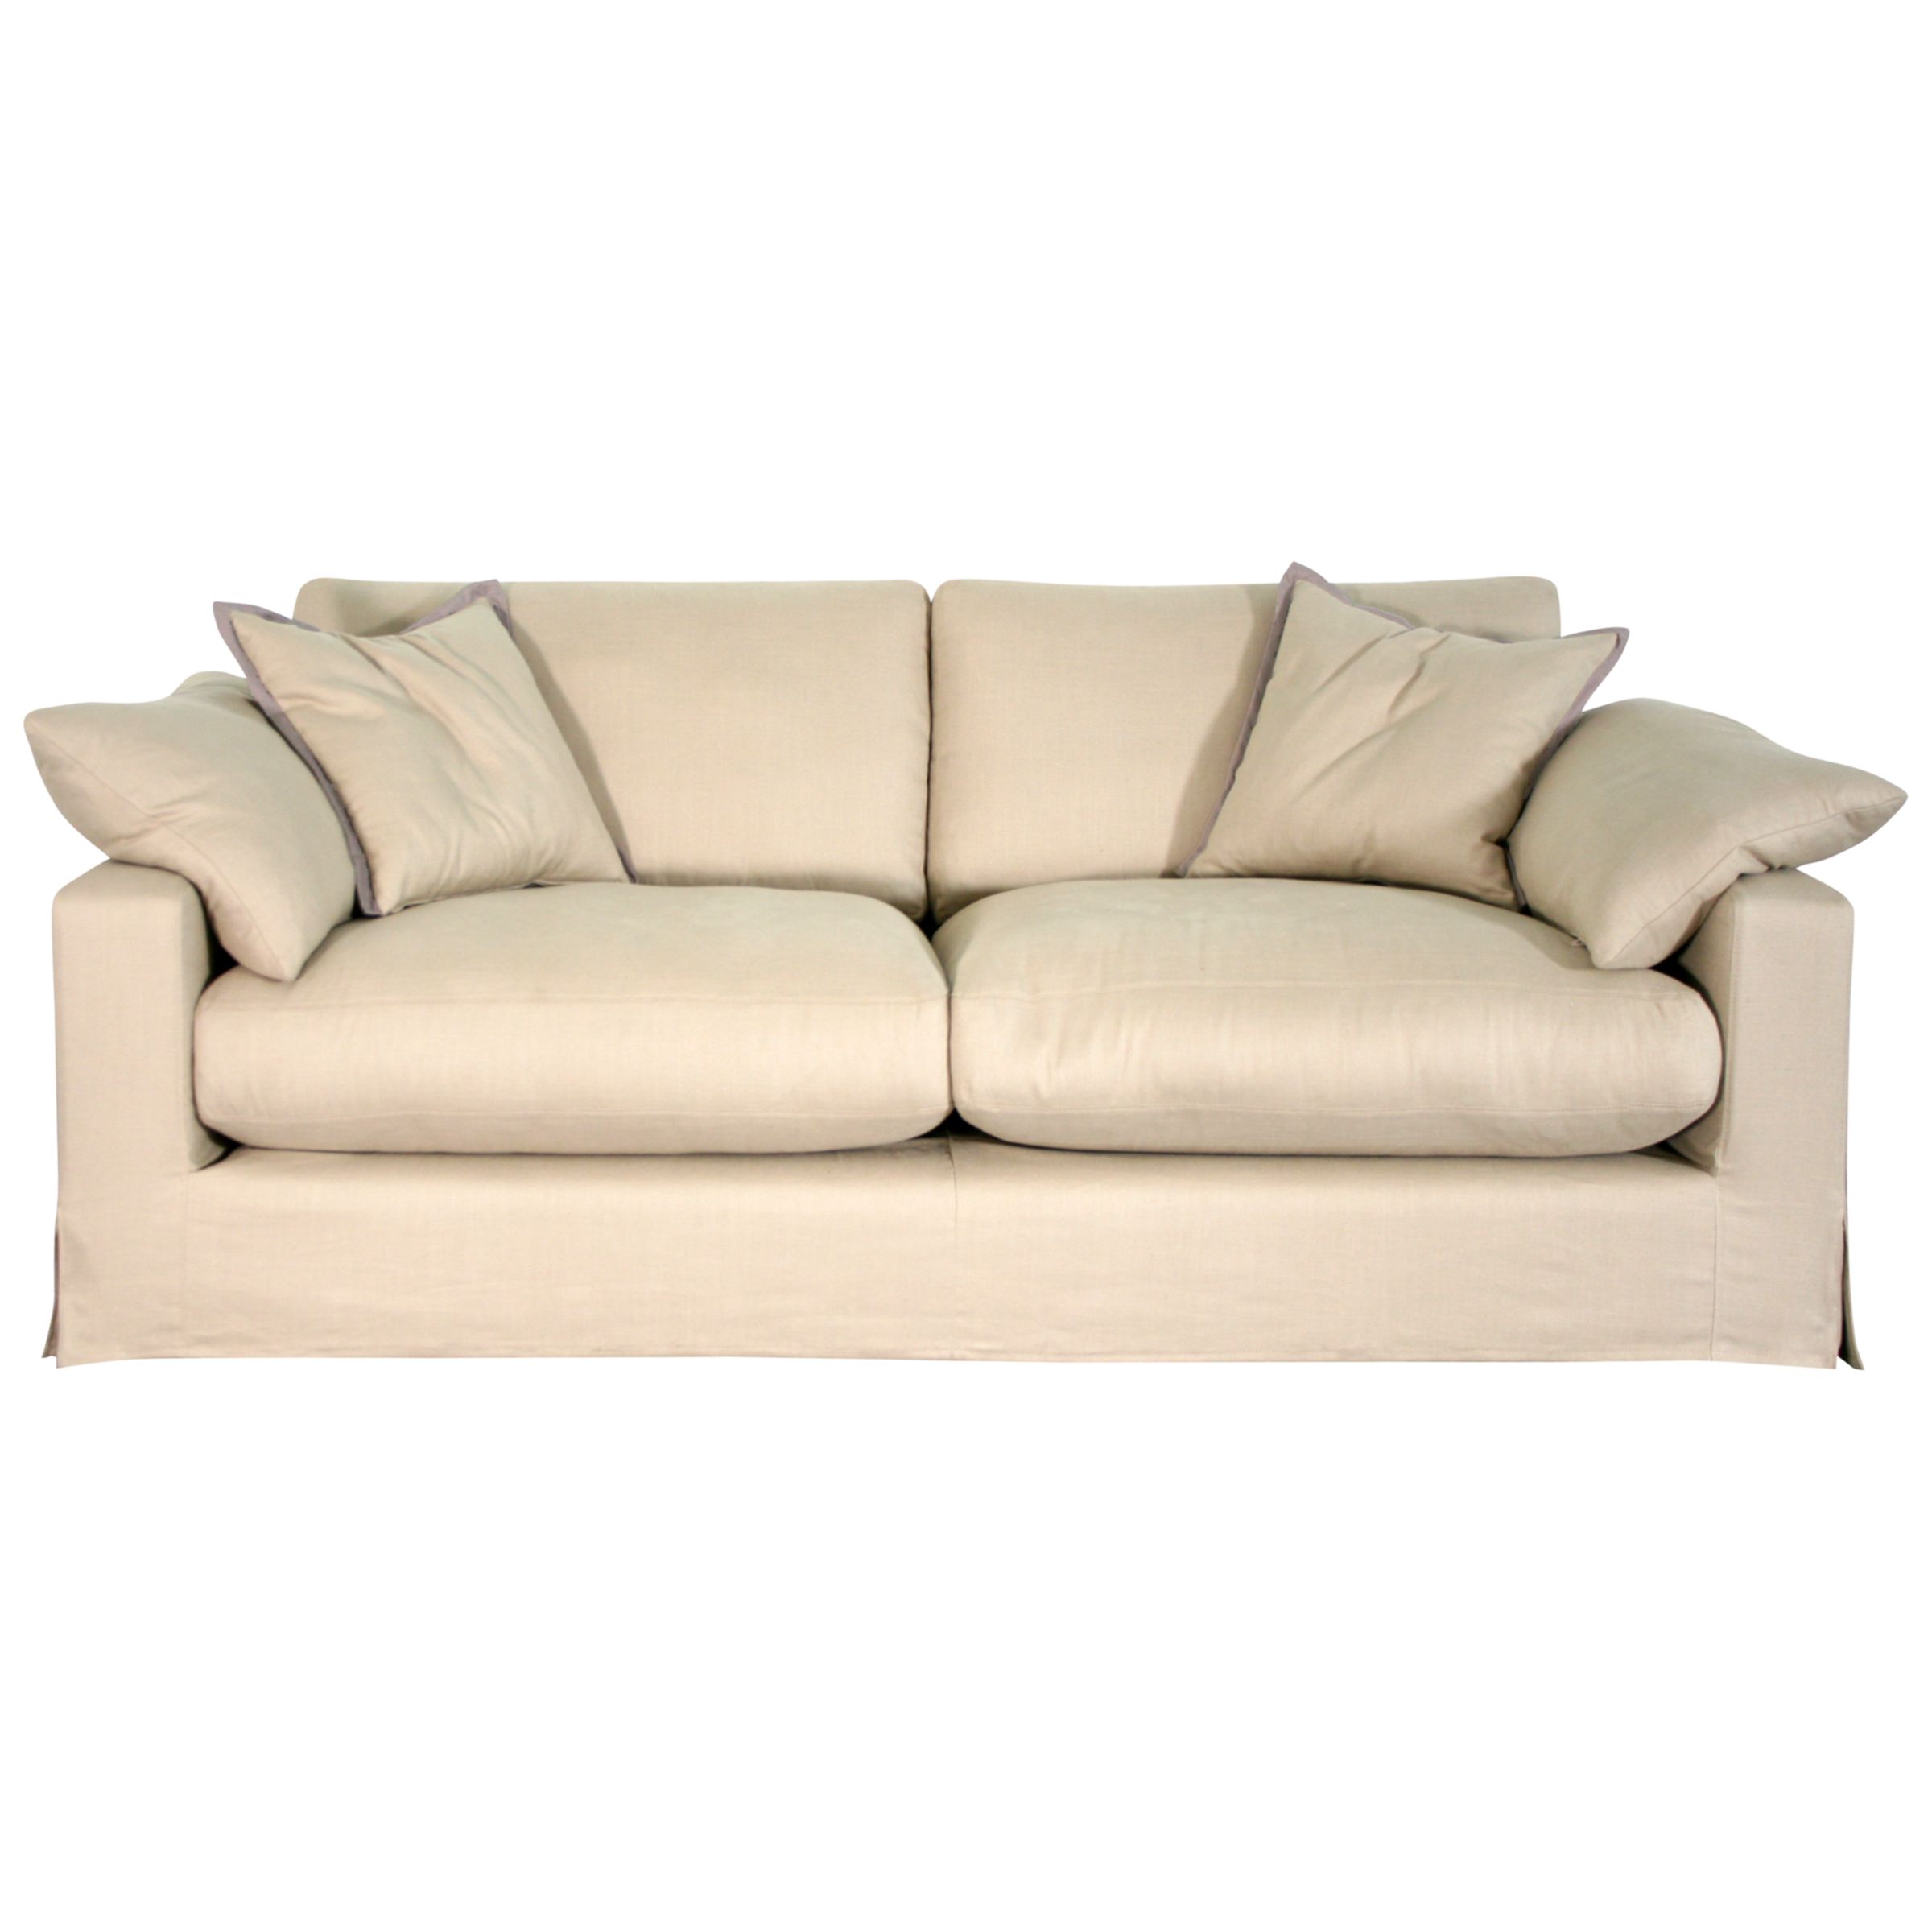 John Lewis Belle Standard Back Medium Sofa, Latte, width 192cm